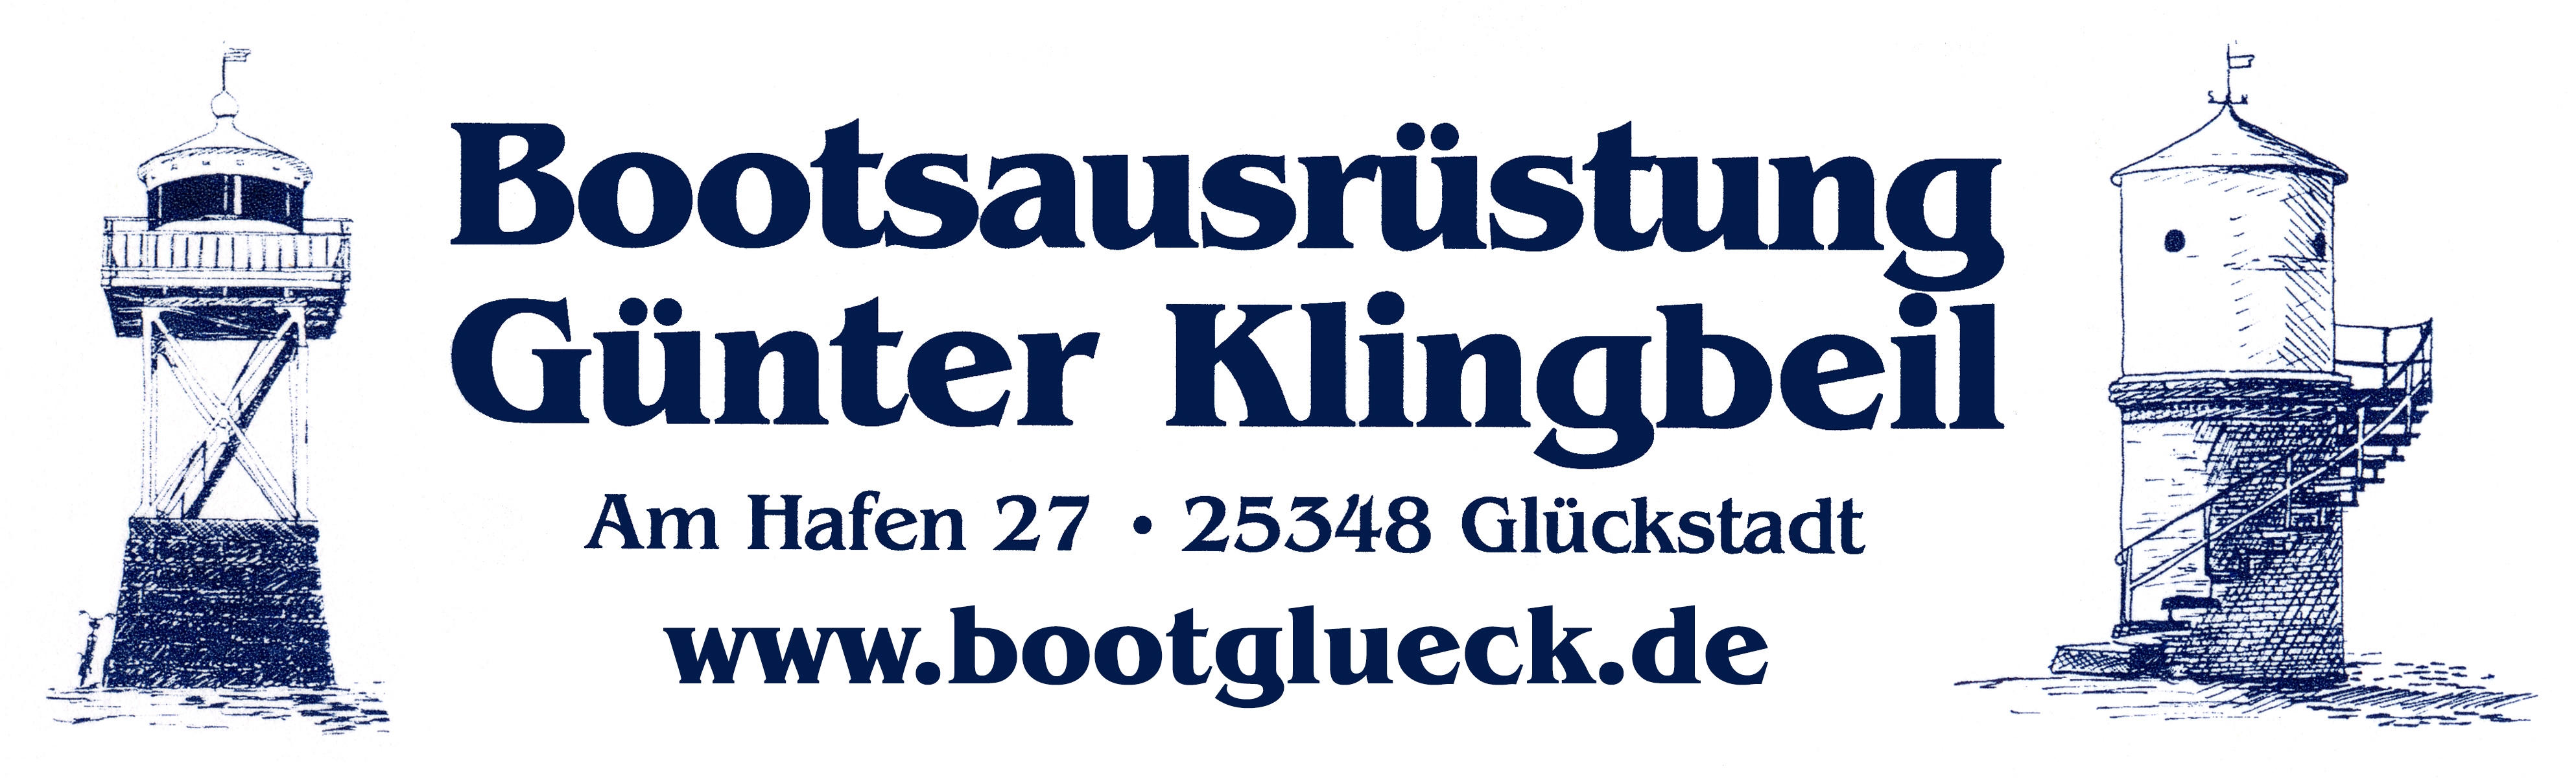 Bootsausrüstung Günter Klingbeil